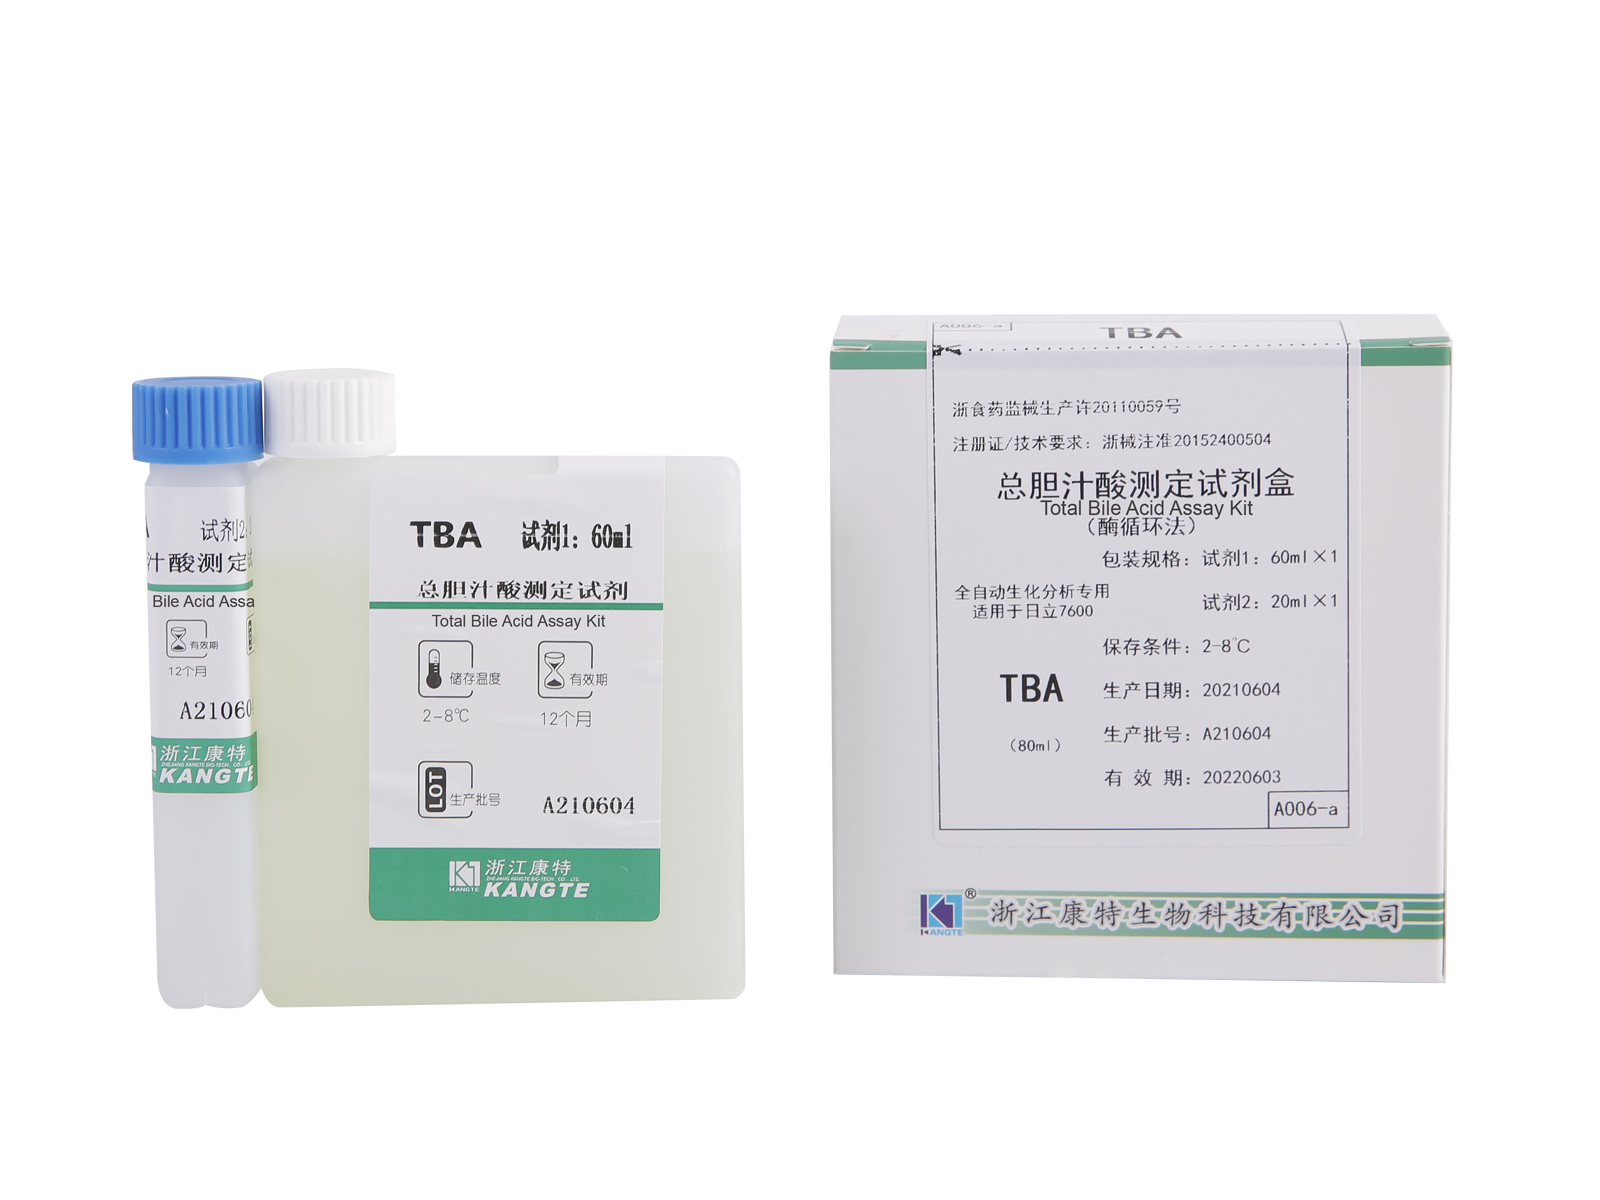 【TBA】Total bilis Acidum Asssay Kit (Enzyme Revolutio Methodi)